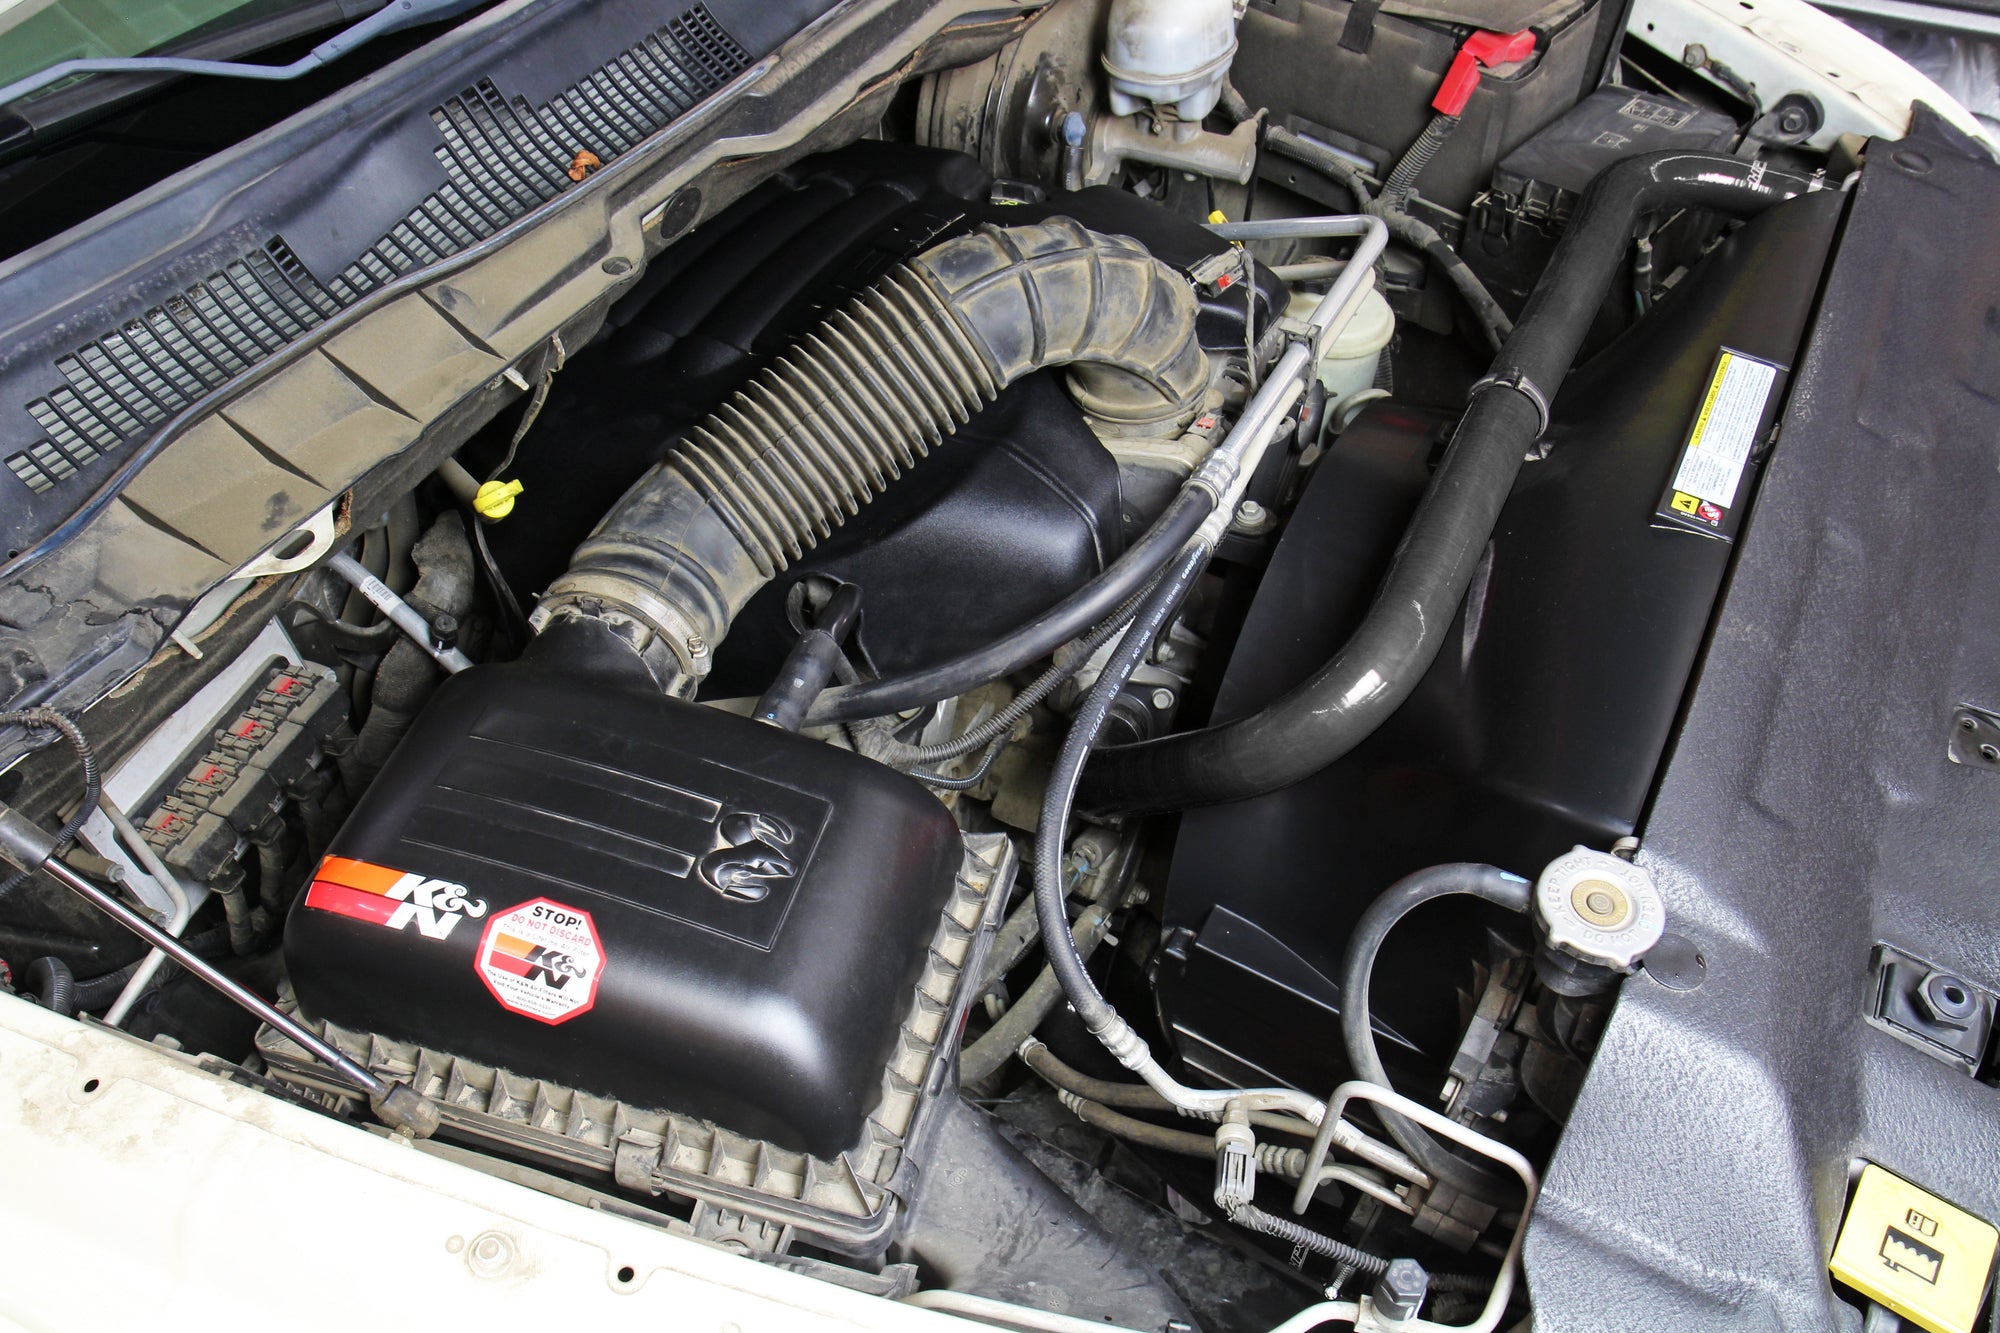 HPS Black Silicone Radiator Hose Kit 57-1818 replace upper and lower coolant hoses OE 55056772AB, 55056771AB on 2013-2018 Dodge Ram 3500 Pickup 5.7L V8 Hemi